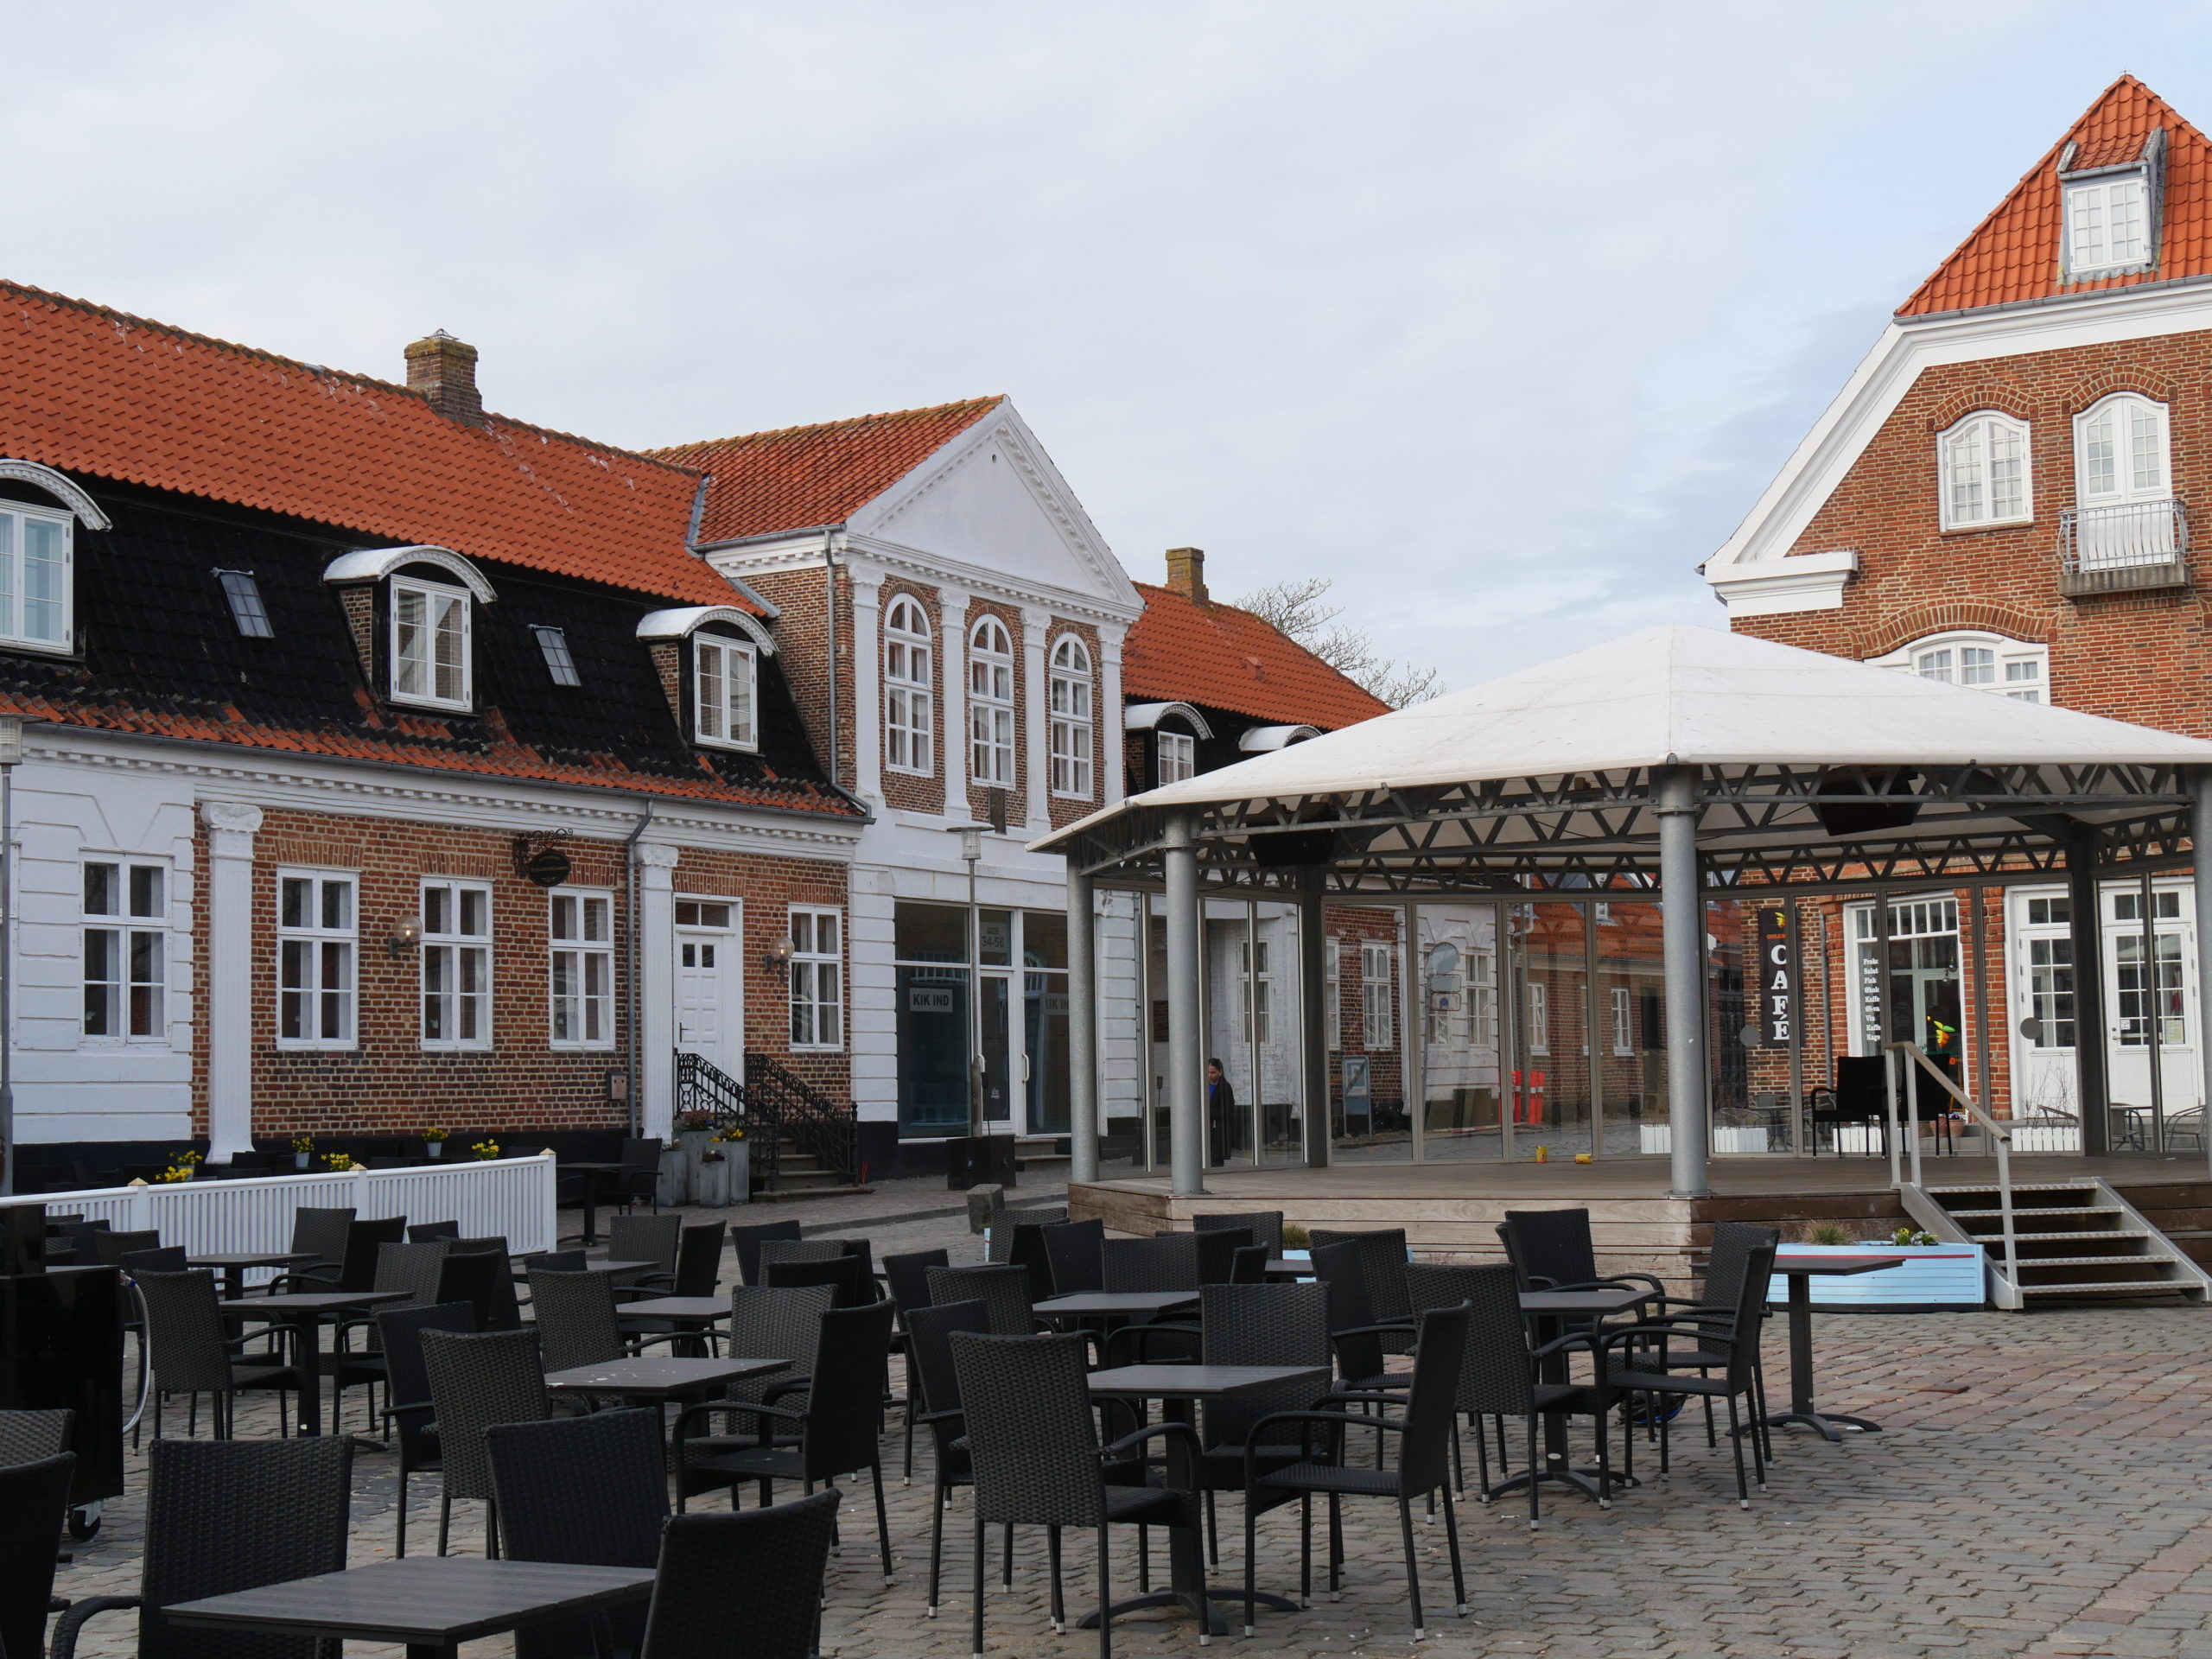 Hotêl Restaurant de Ringkøbing